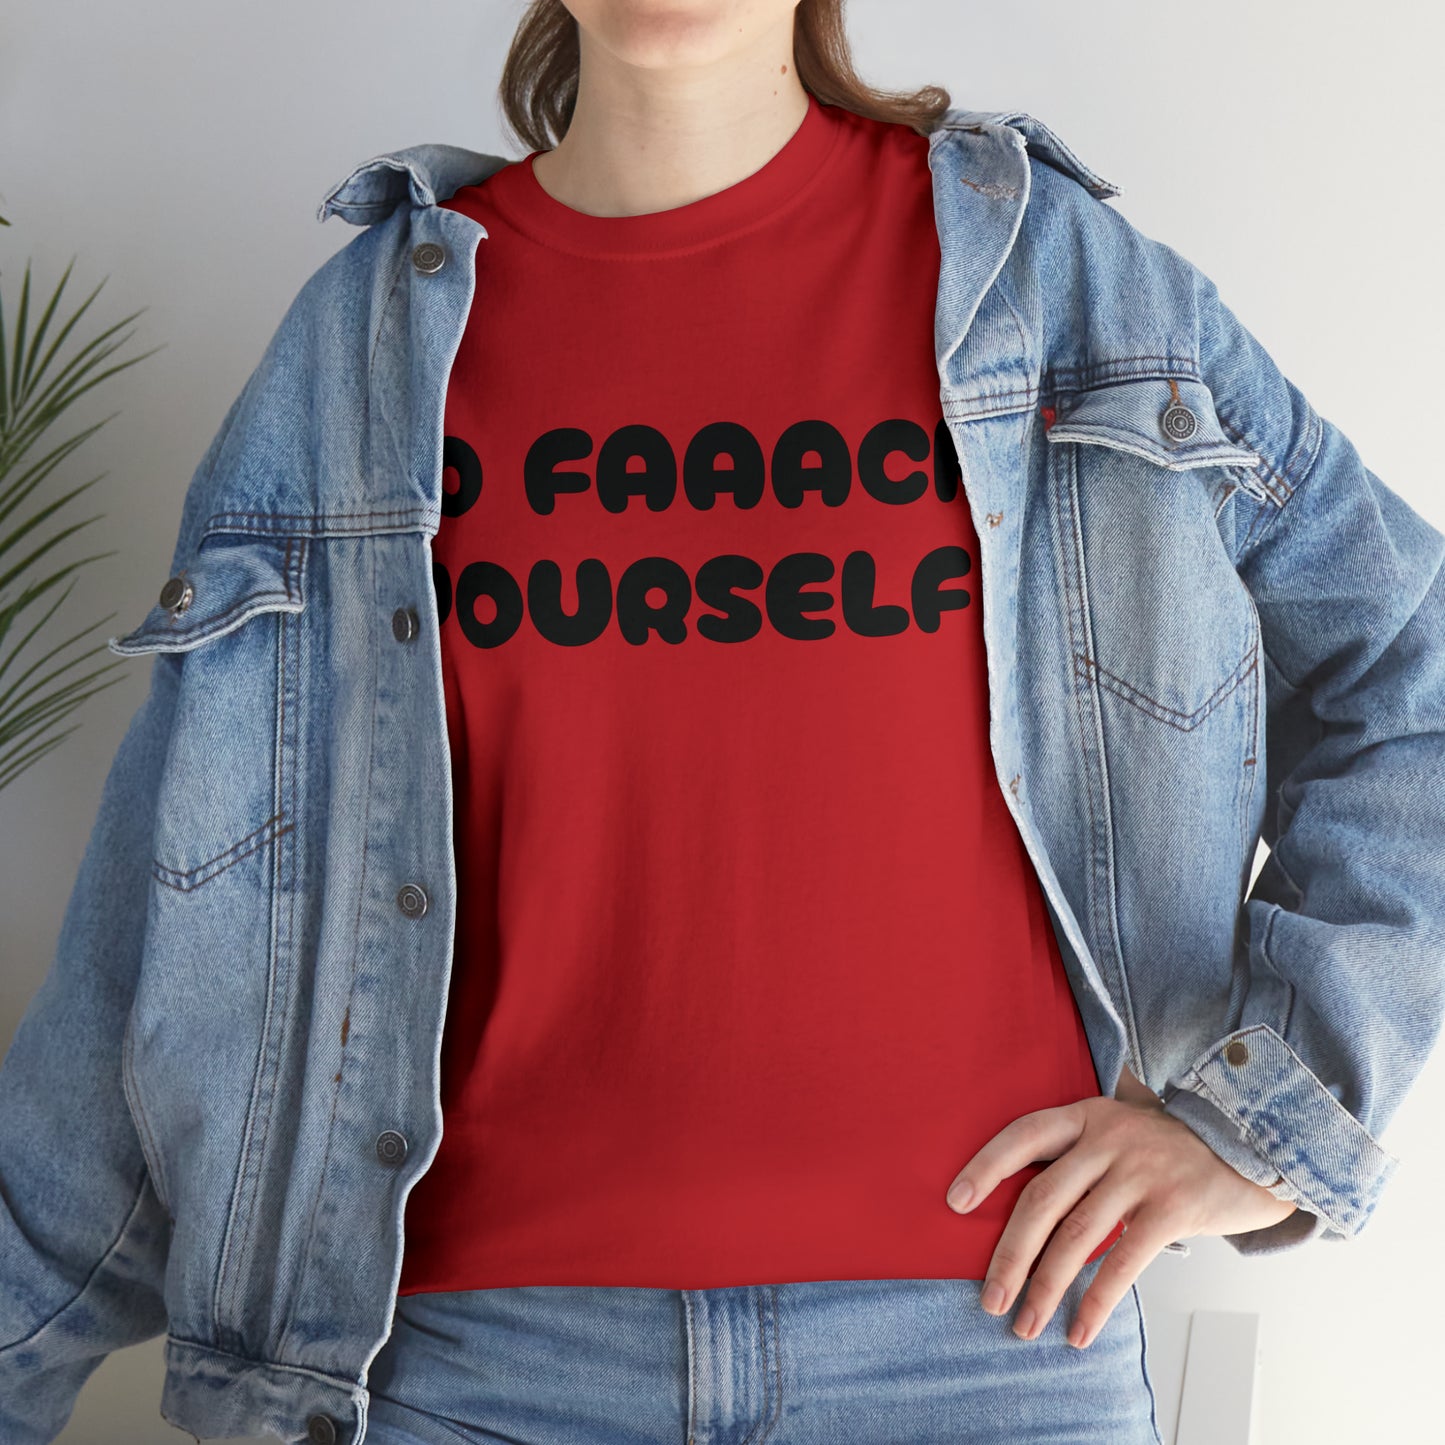 GO FAAACK YOURSELF Camiseta de algodón pesado unisex